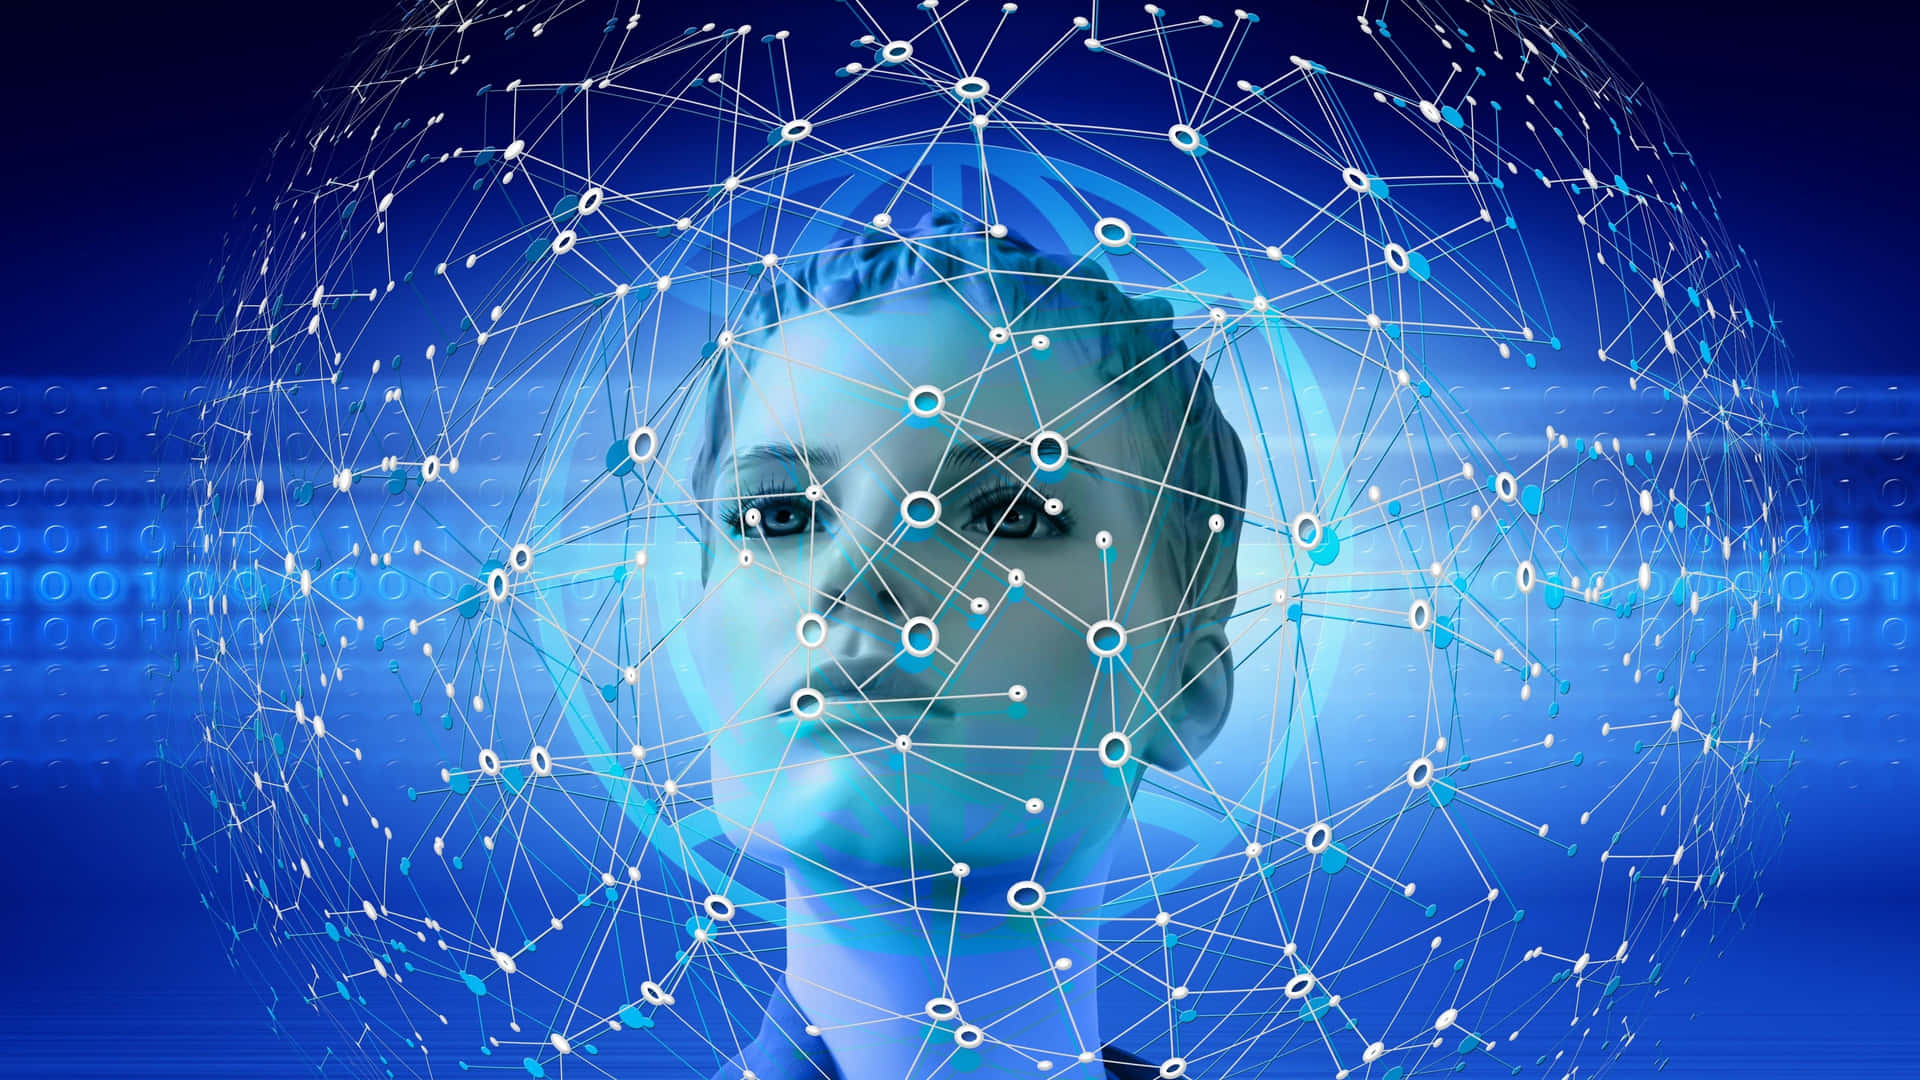 Digital Human Connection Network.jpg Wallpaper